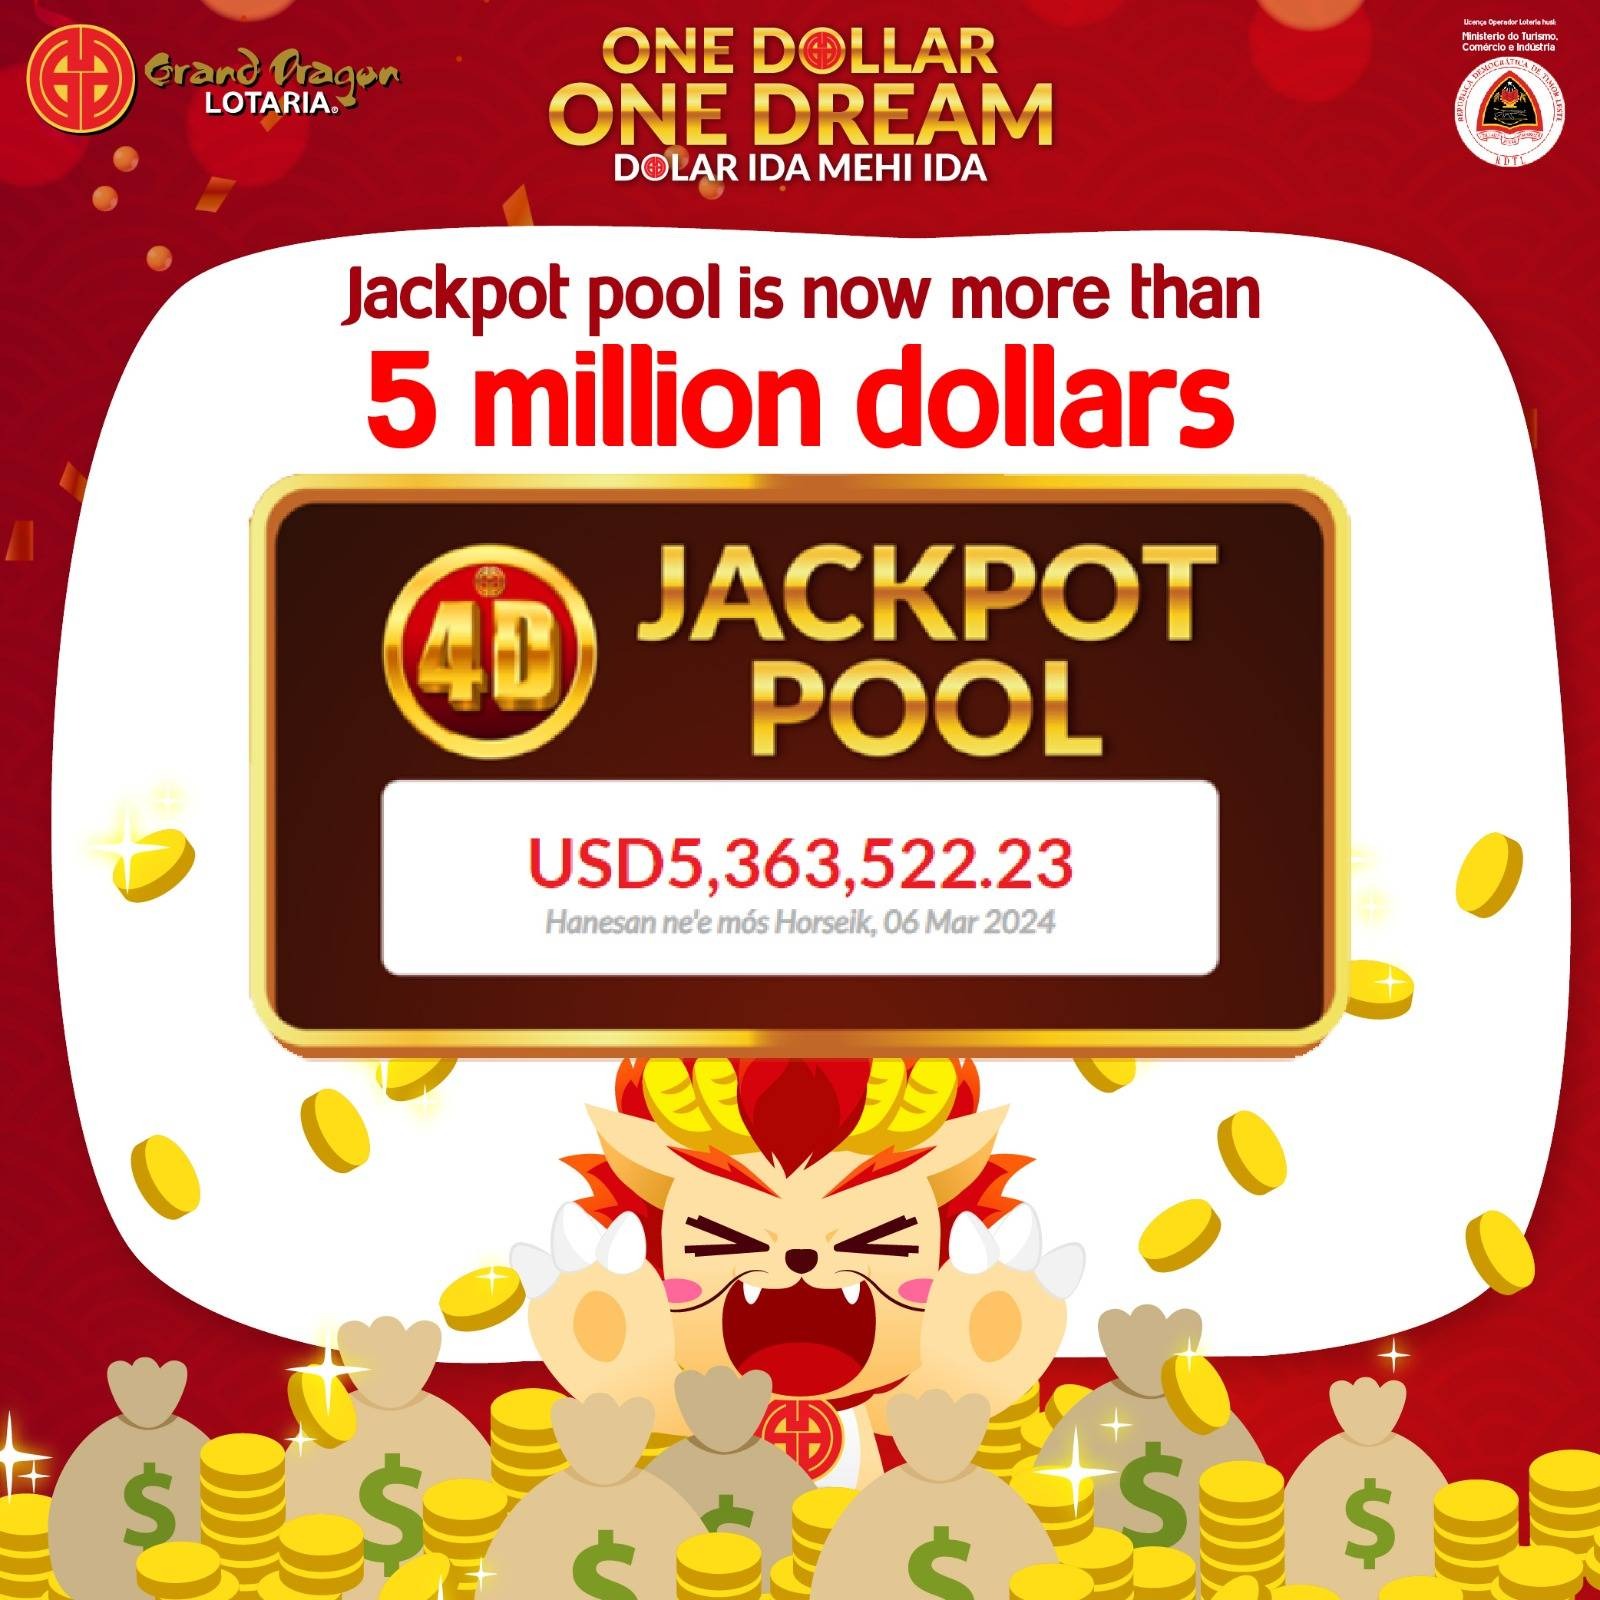 More than USD 5 million jackpot awaits you!